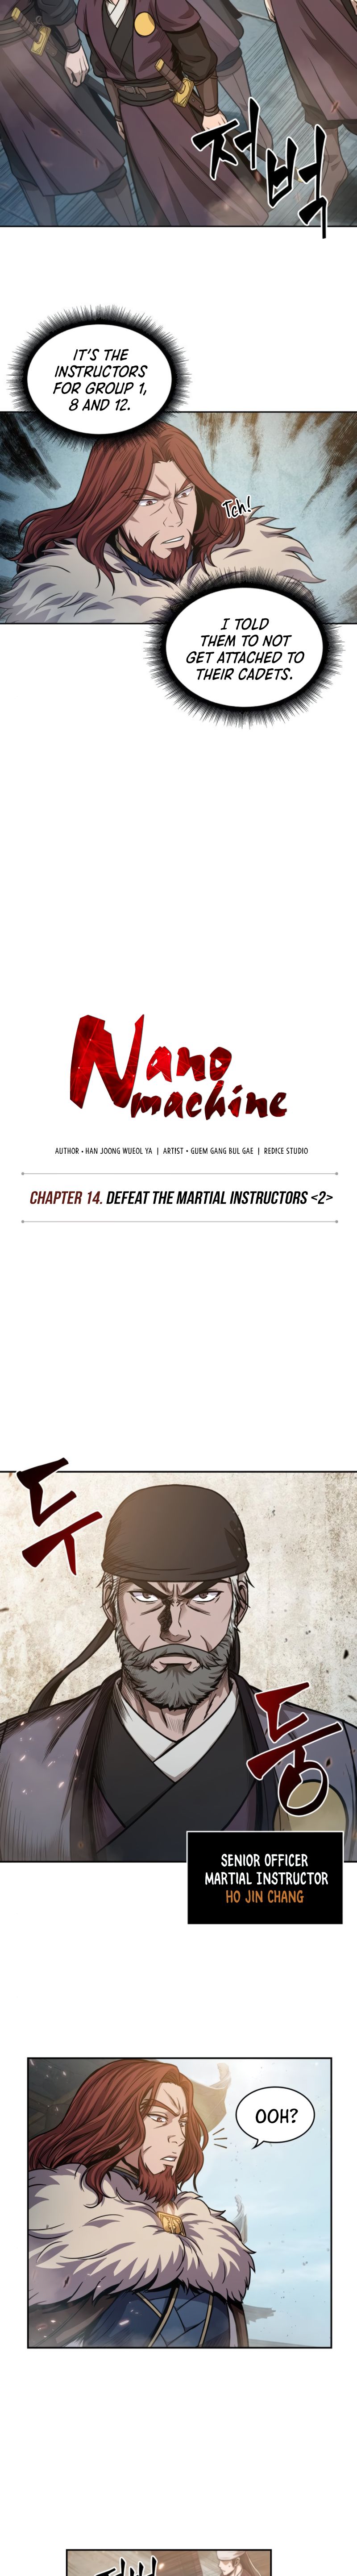 Nano Machine - Chapter 36 Page 3